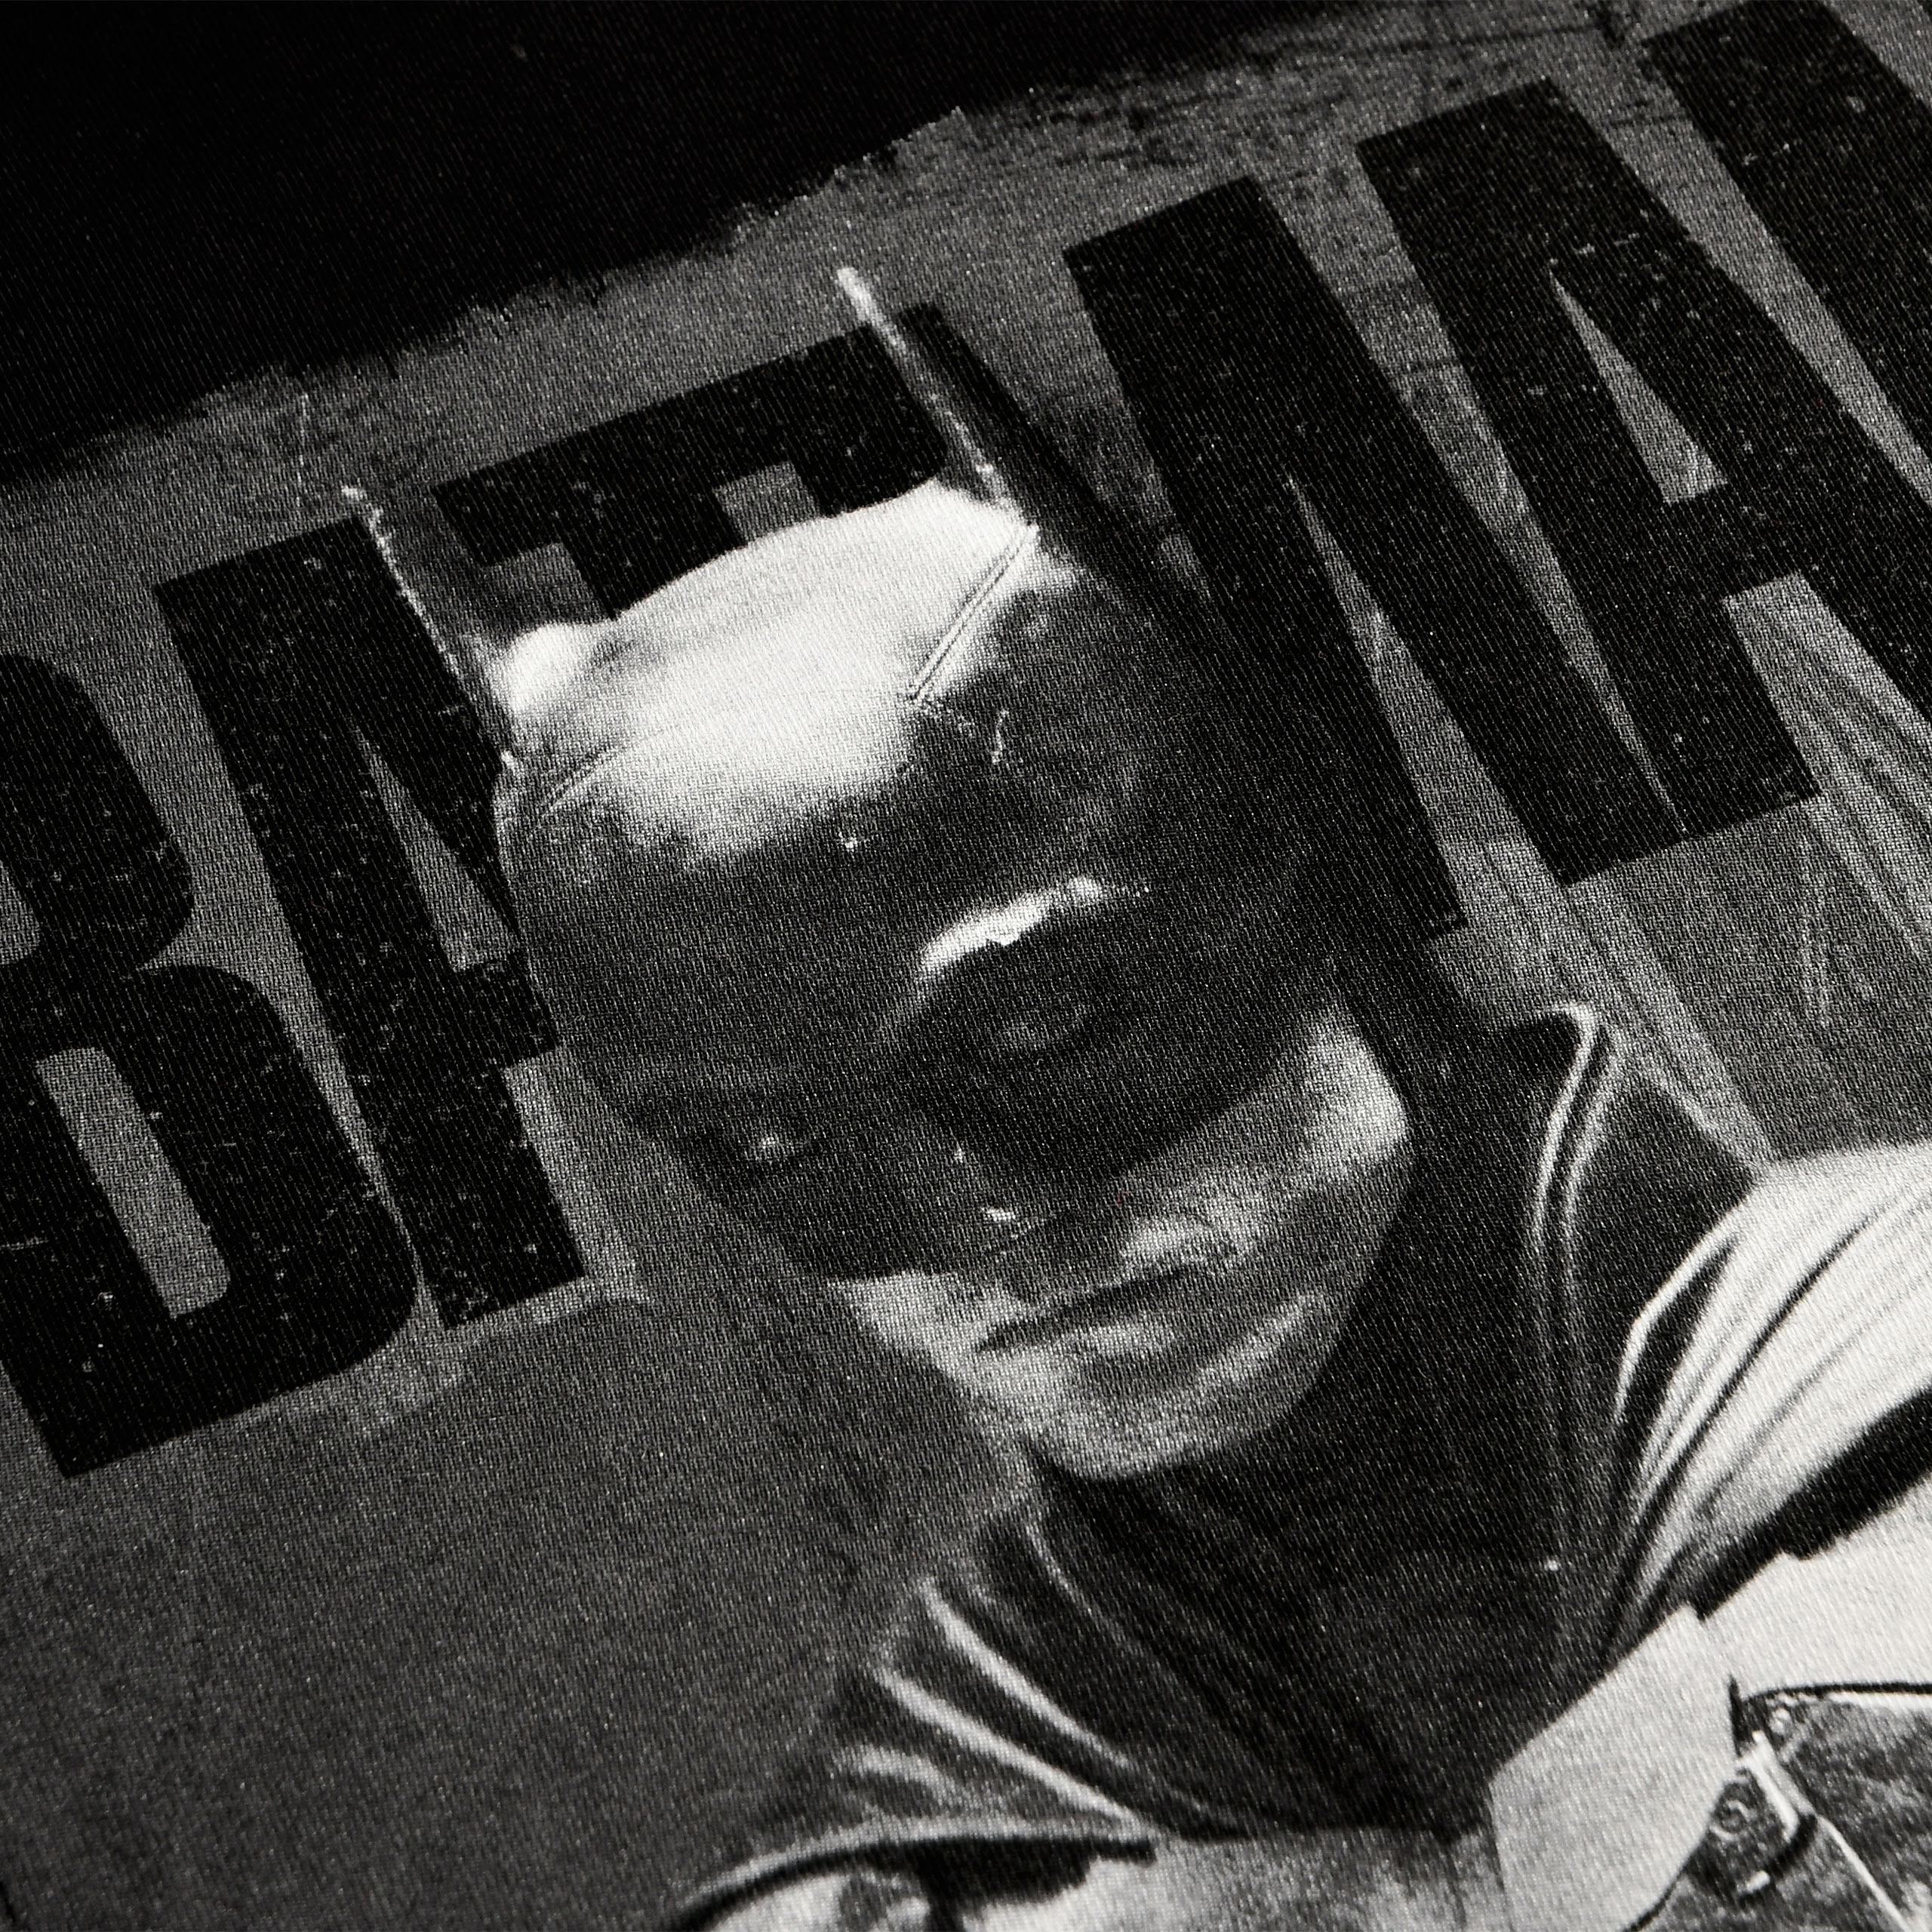 The Batman - Monochrome Poster T-Shirt schwarz